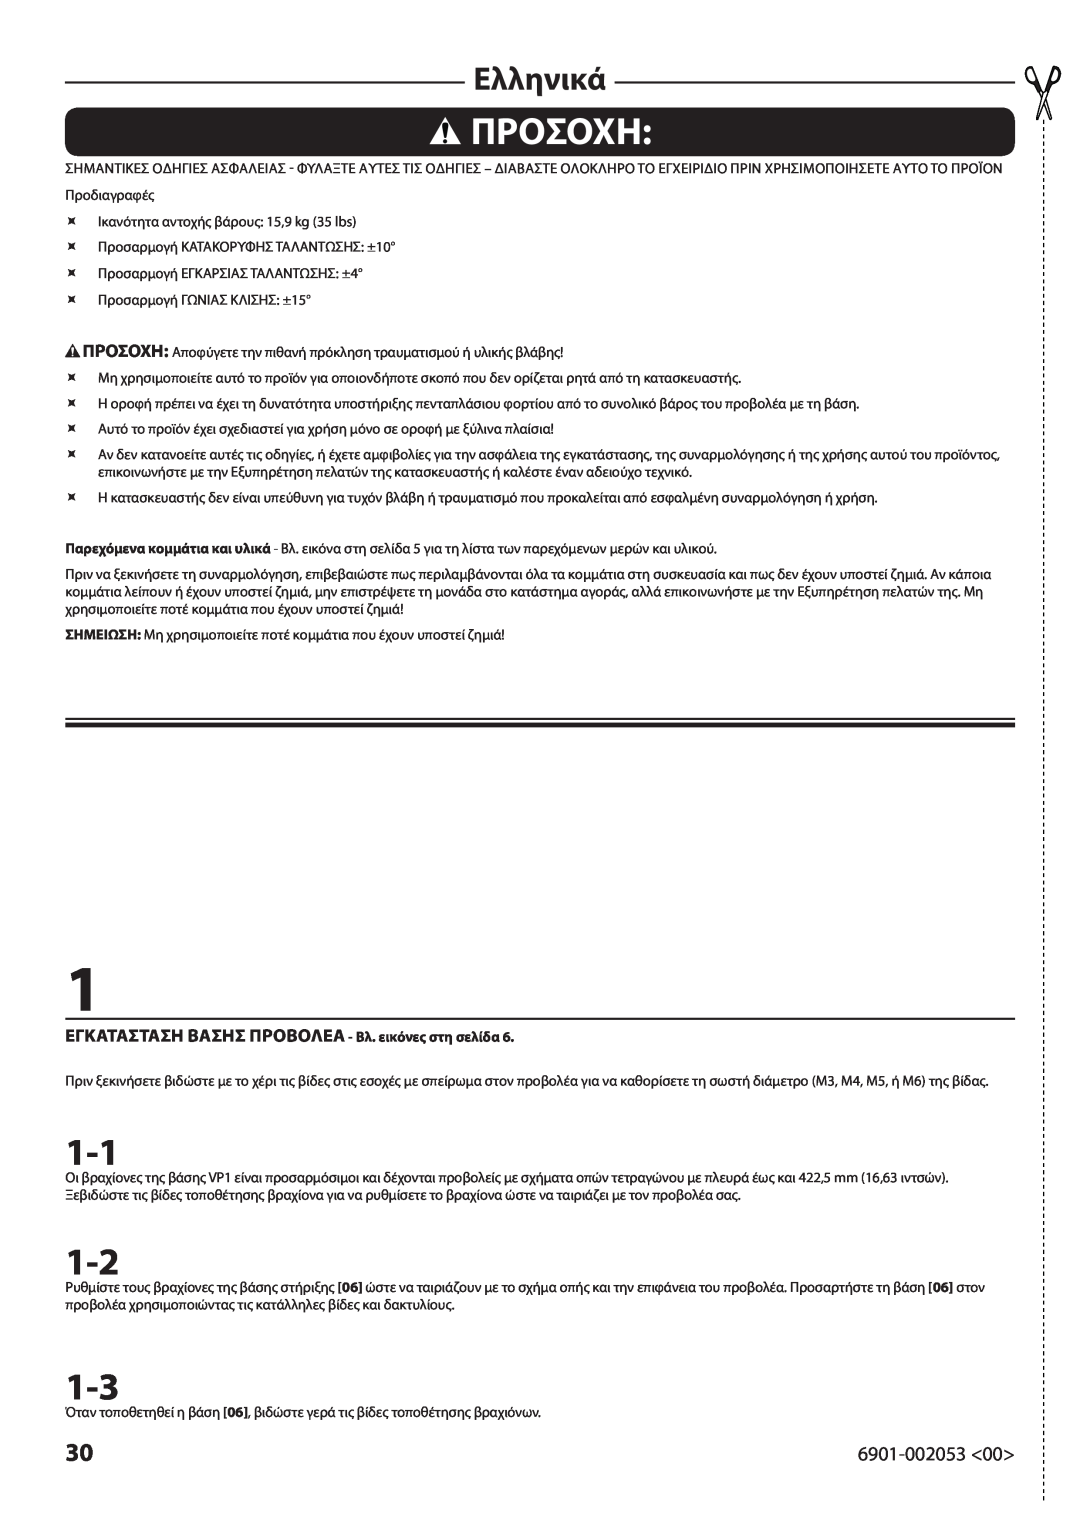 Sanus Systems VP1 manual Προσοχη, Ελληνικά, ΕΓΚΑΤΑΣΤΑΣΗ ΒΑΣΗΣ ΠΡΟΒΟΛΕΑ - Βλ. εικόνες στη σελίδα 